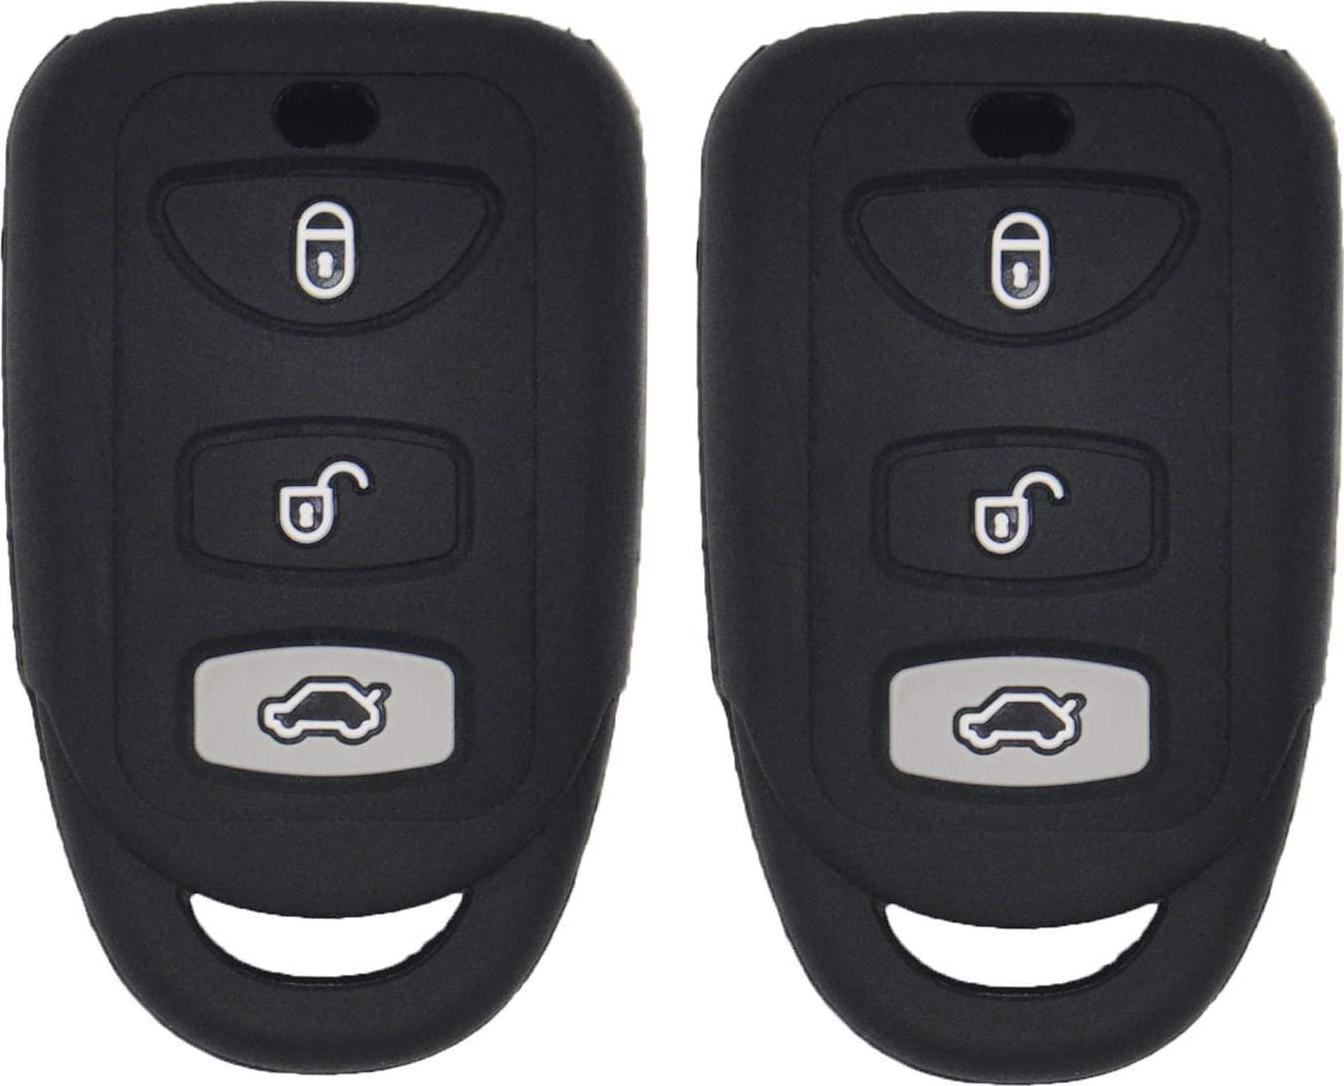 LemSa, LemSa 2Pcs 3 Buttons Silicone Key Fob Cover Case Protector Holder for Hyundai Elantra Genesis Sonata, Compatible with Kia Sorento Forte Optima Rondo Spectra OSLOKA-423T, Black+Black